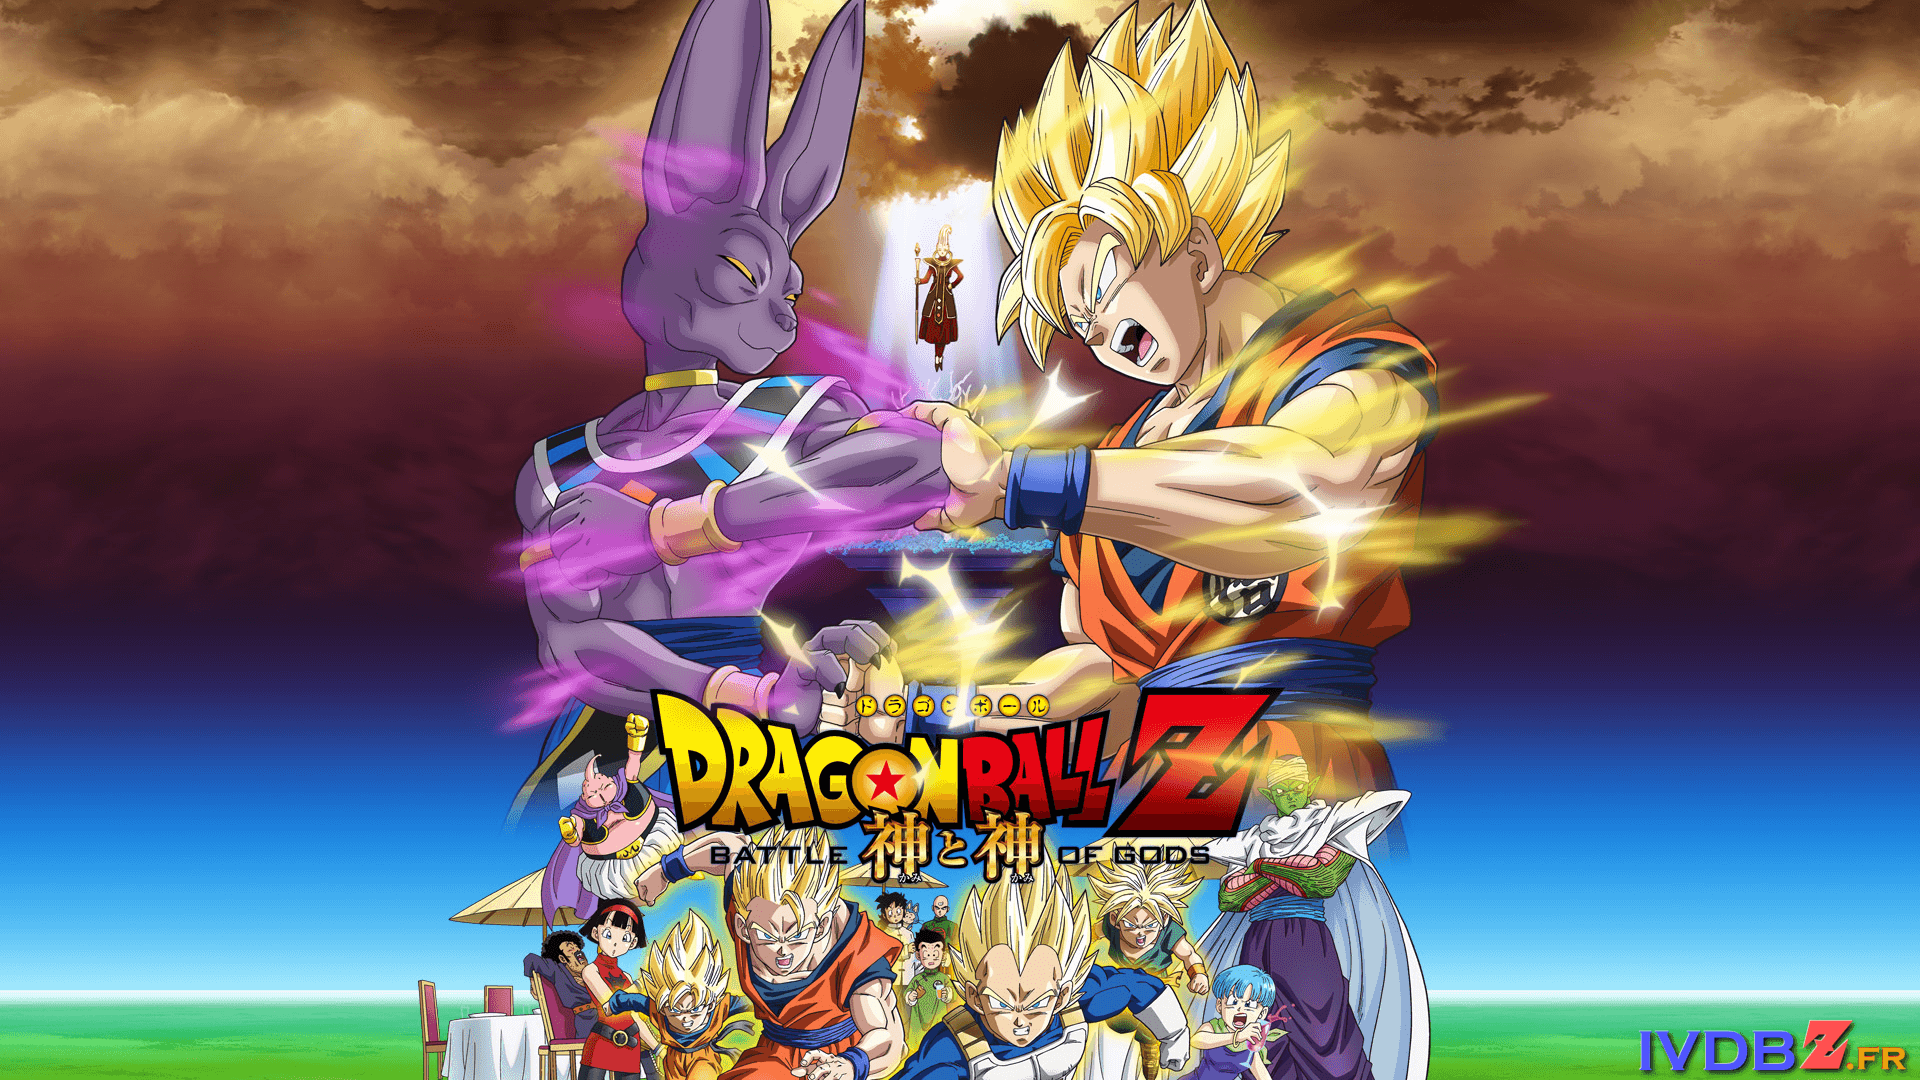 Dragon Ball Z: Battle of Gods HD Wallpaper